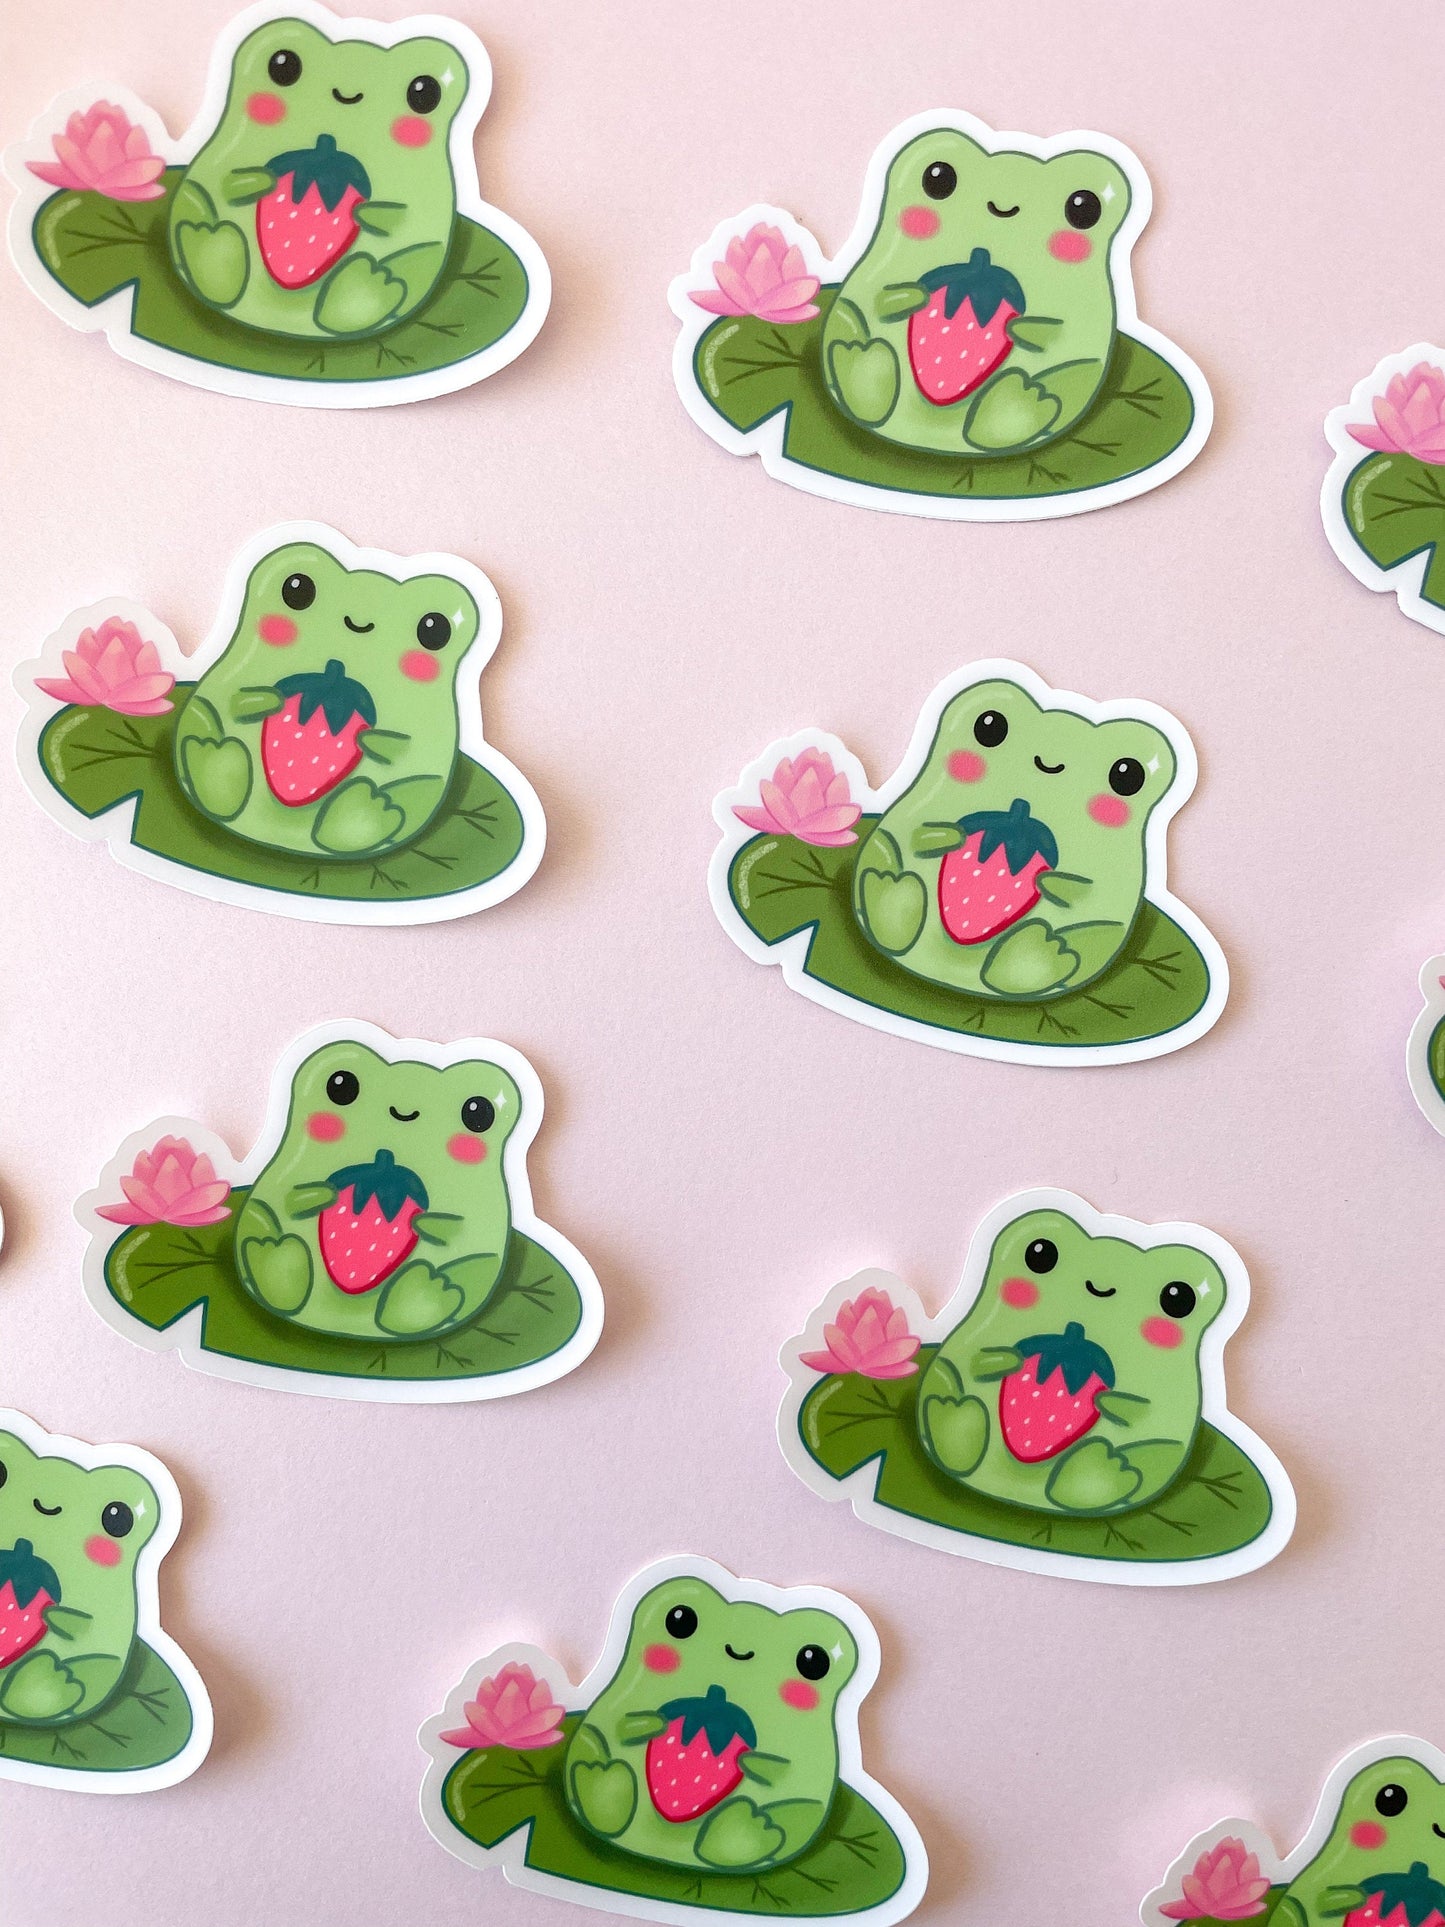 Froggy with Strawberry Sticker//Digital Art//Stickers//Illustration//Home decor//kawaii//Stationary//cottagecore//Waterproof Sticker